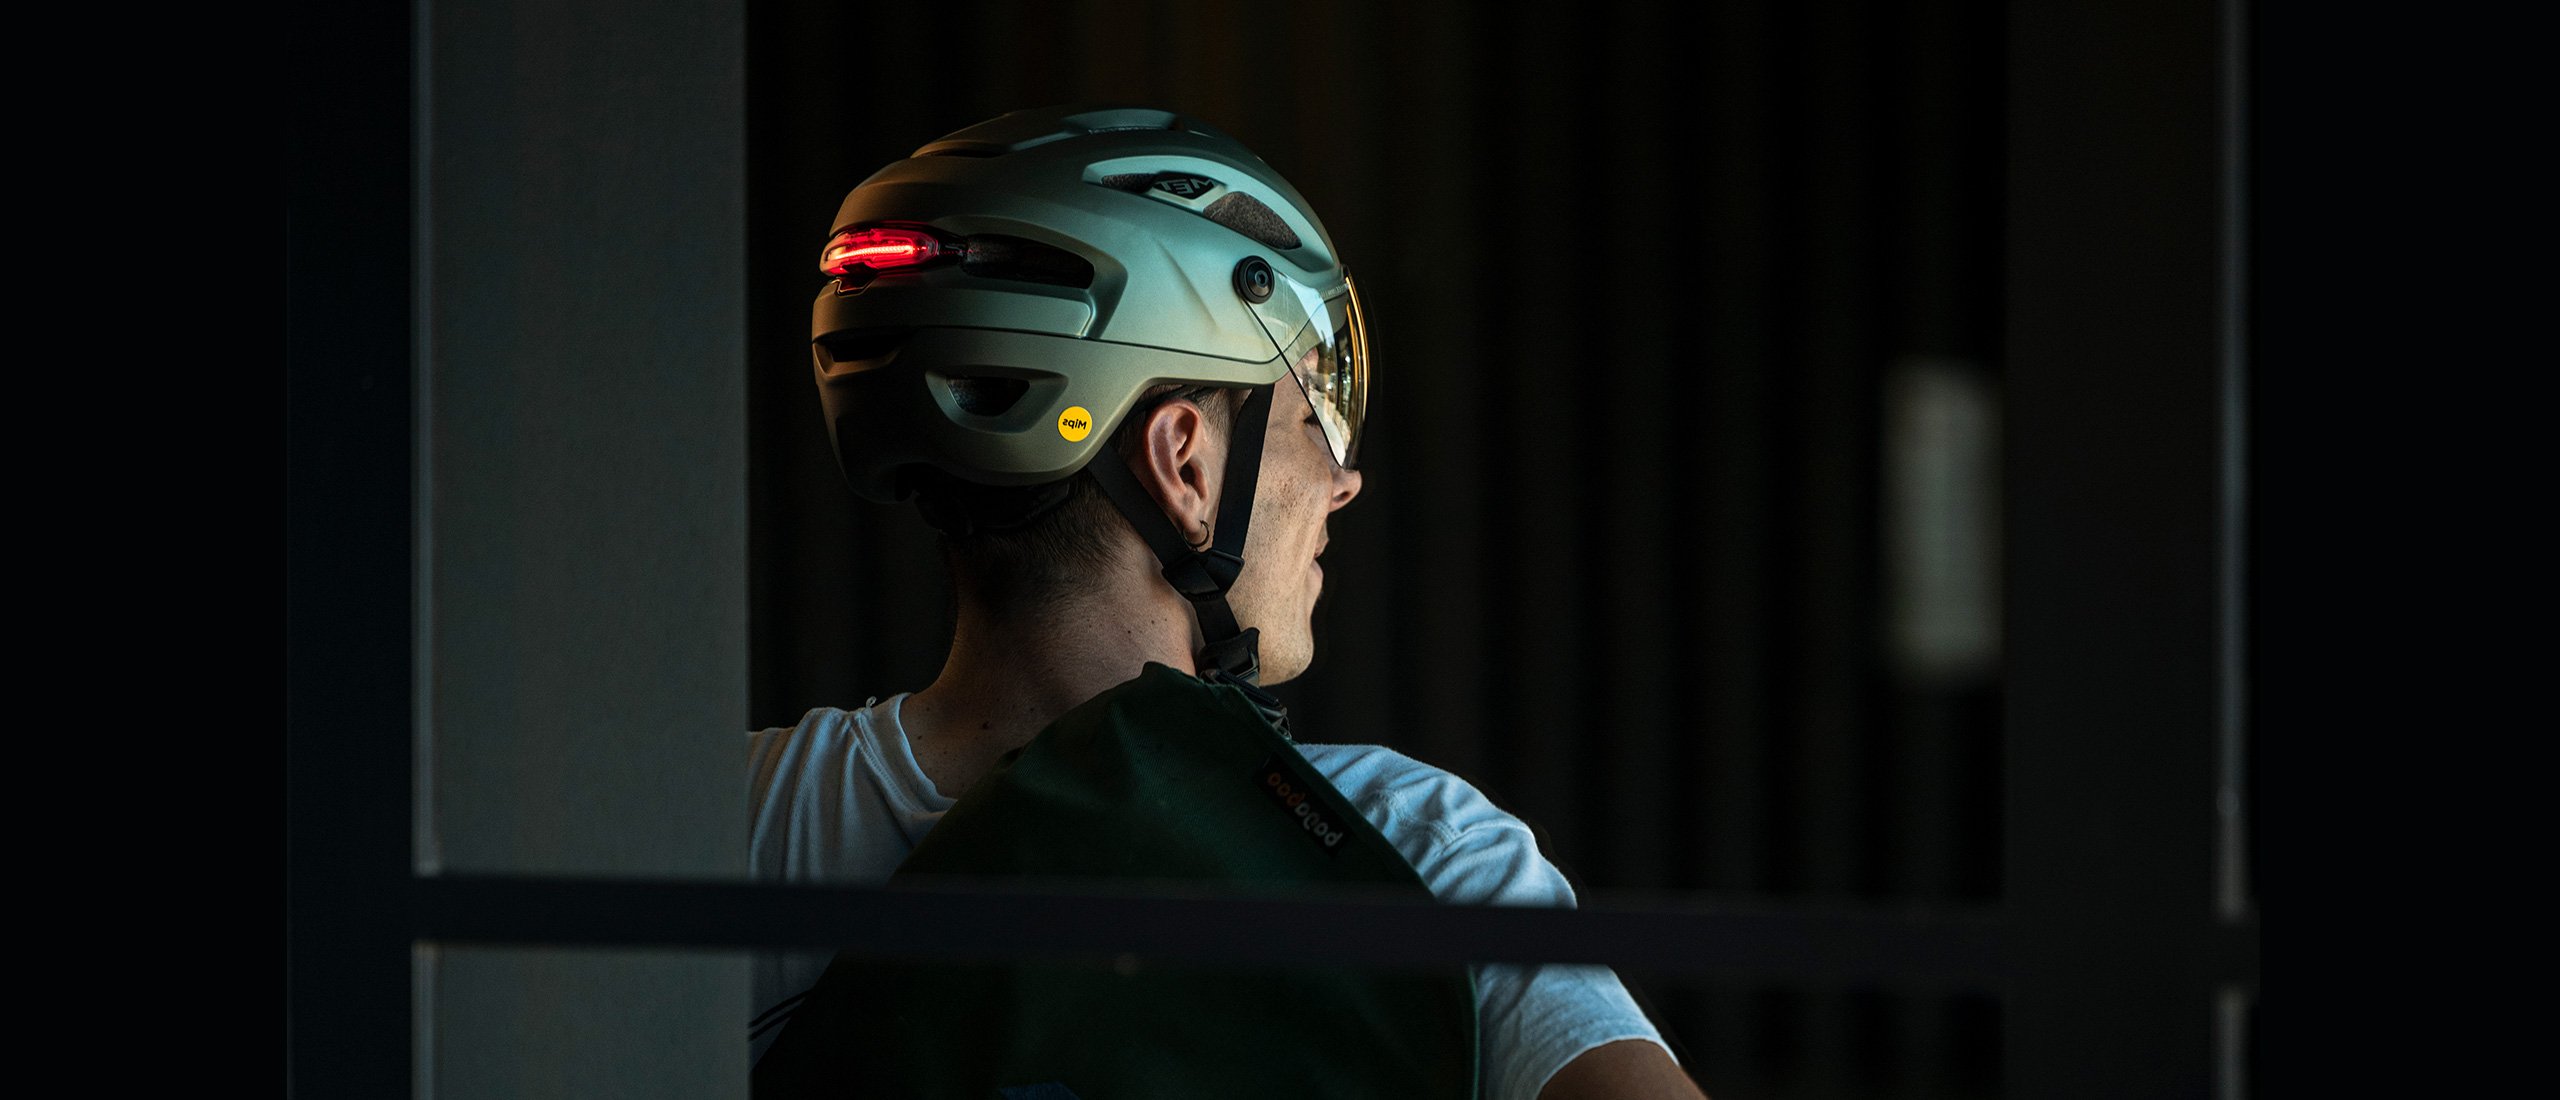 MET Intercity Mips E-Bike Urban Helmet with adjustable shield and magnetic light